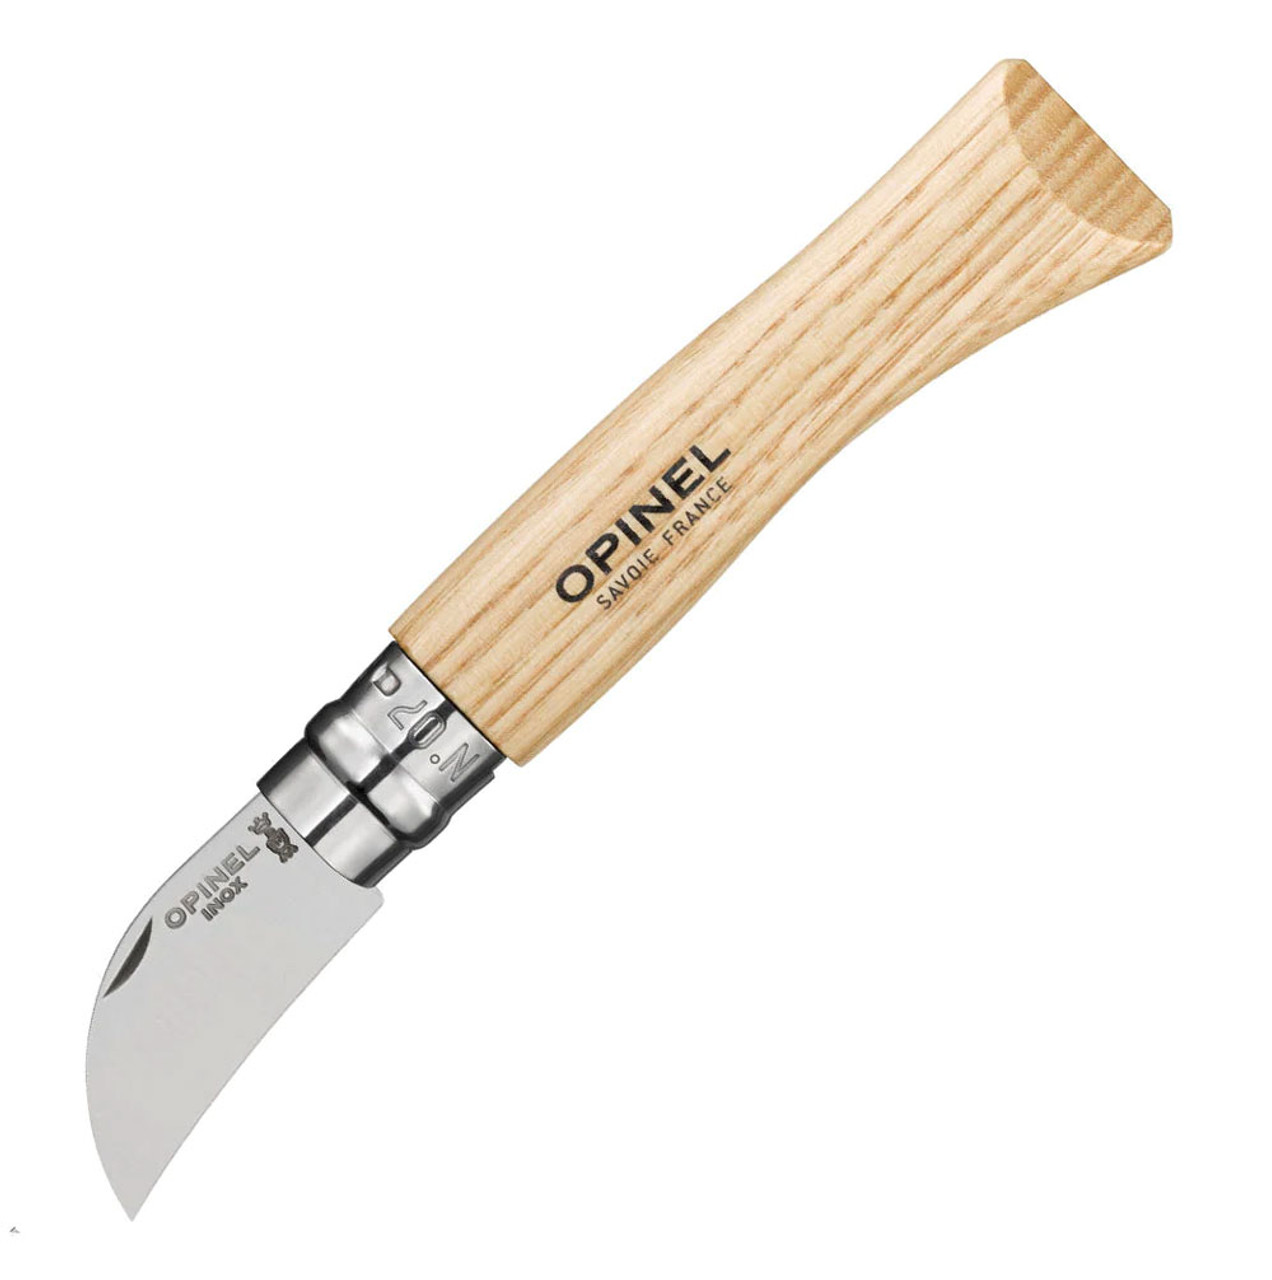 Opinel No 07 Folding Scoring Knife - Chestnut and Garlic Knife (OP002360) 2.1" Hawksbill Stainless Steel Plain Blade, Wood Handle